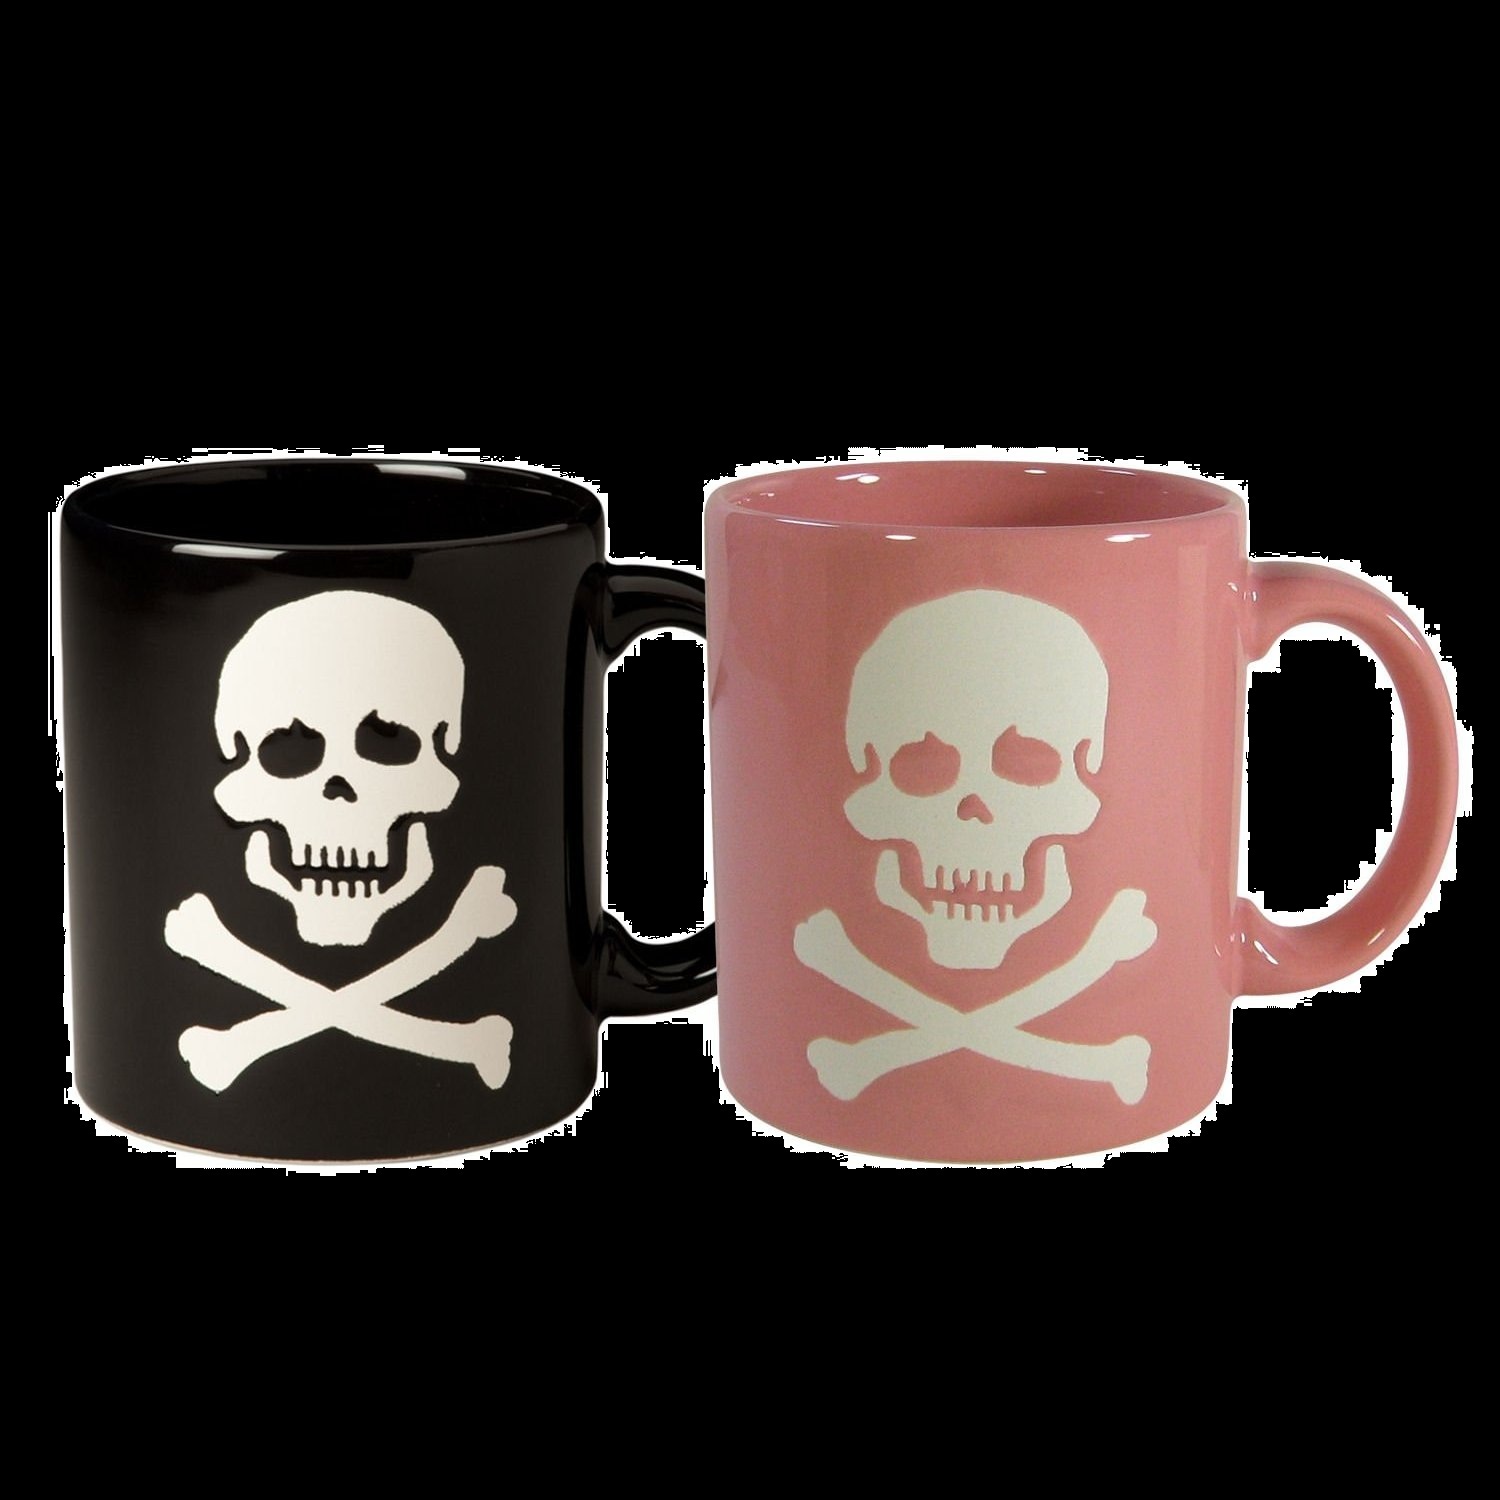 Skull and Cross Bones Halloween Mugs